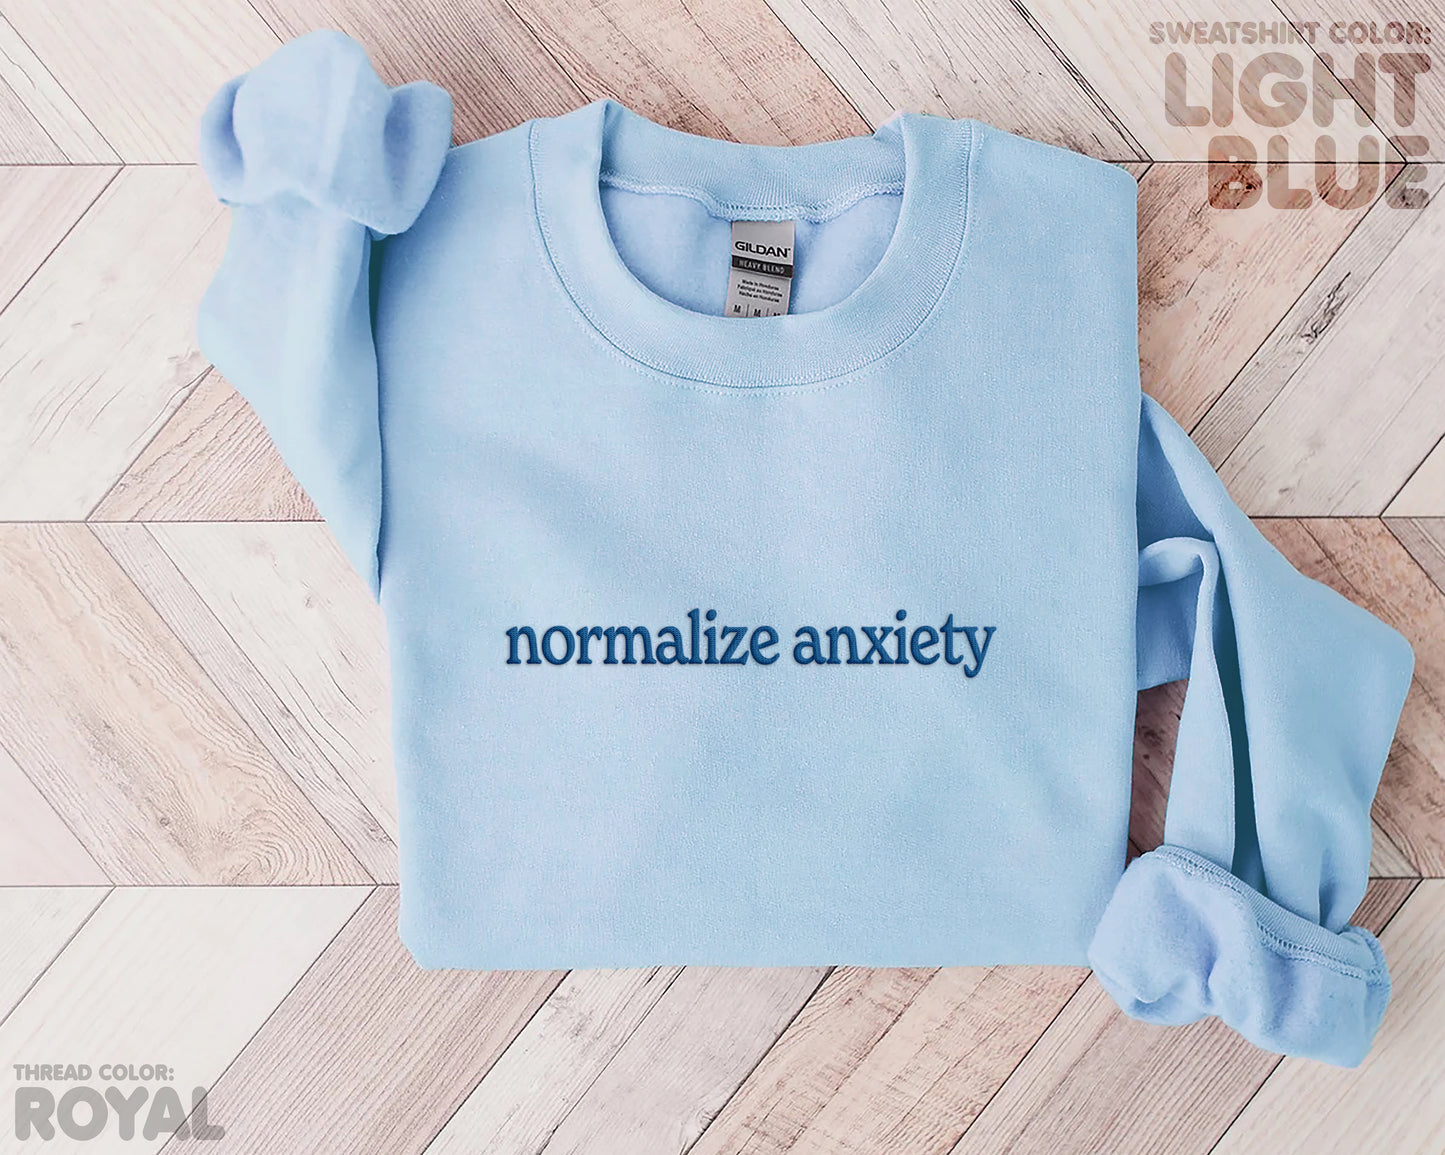 Normalize Anxiety Sweatshirt 